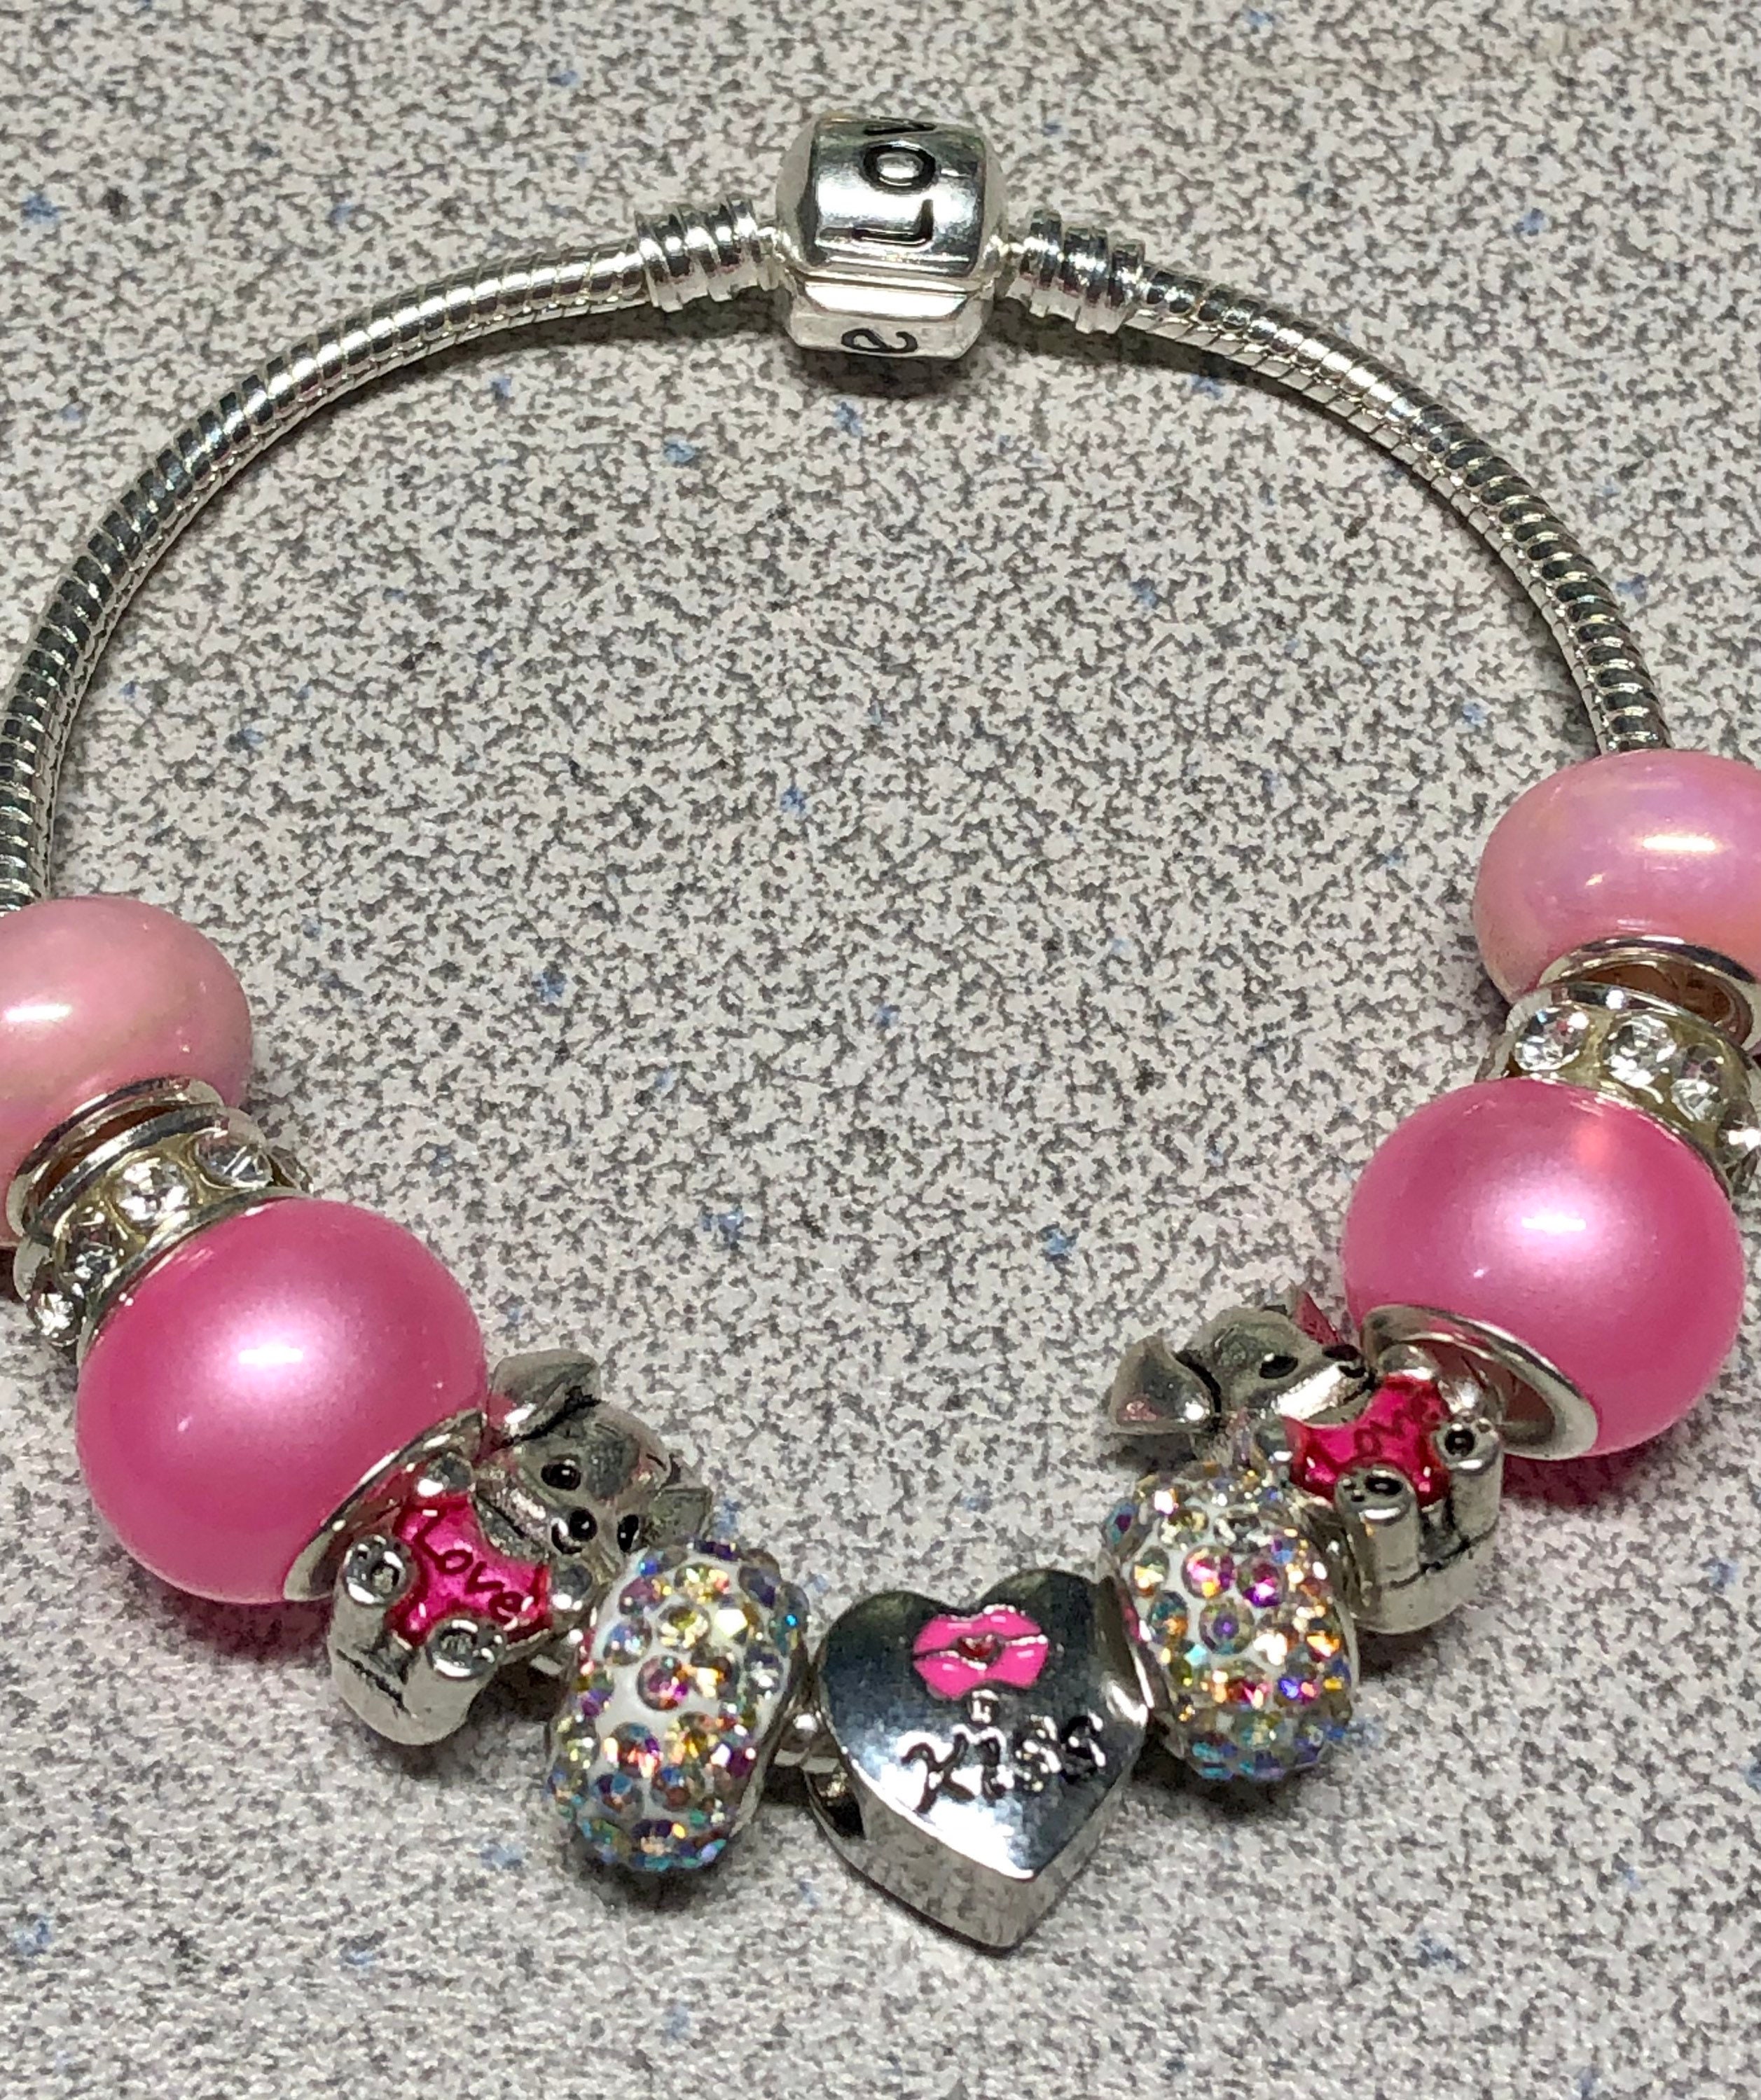 Pandora Like Charm Bracelet. BRIGHT Pink Charms, Teddy Bears, Love